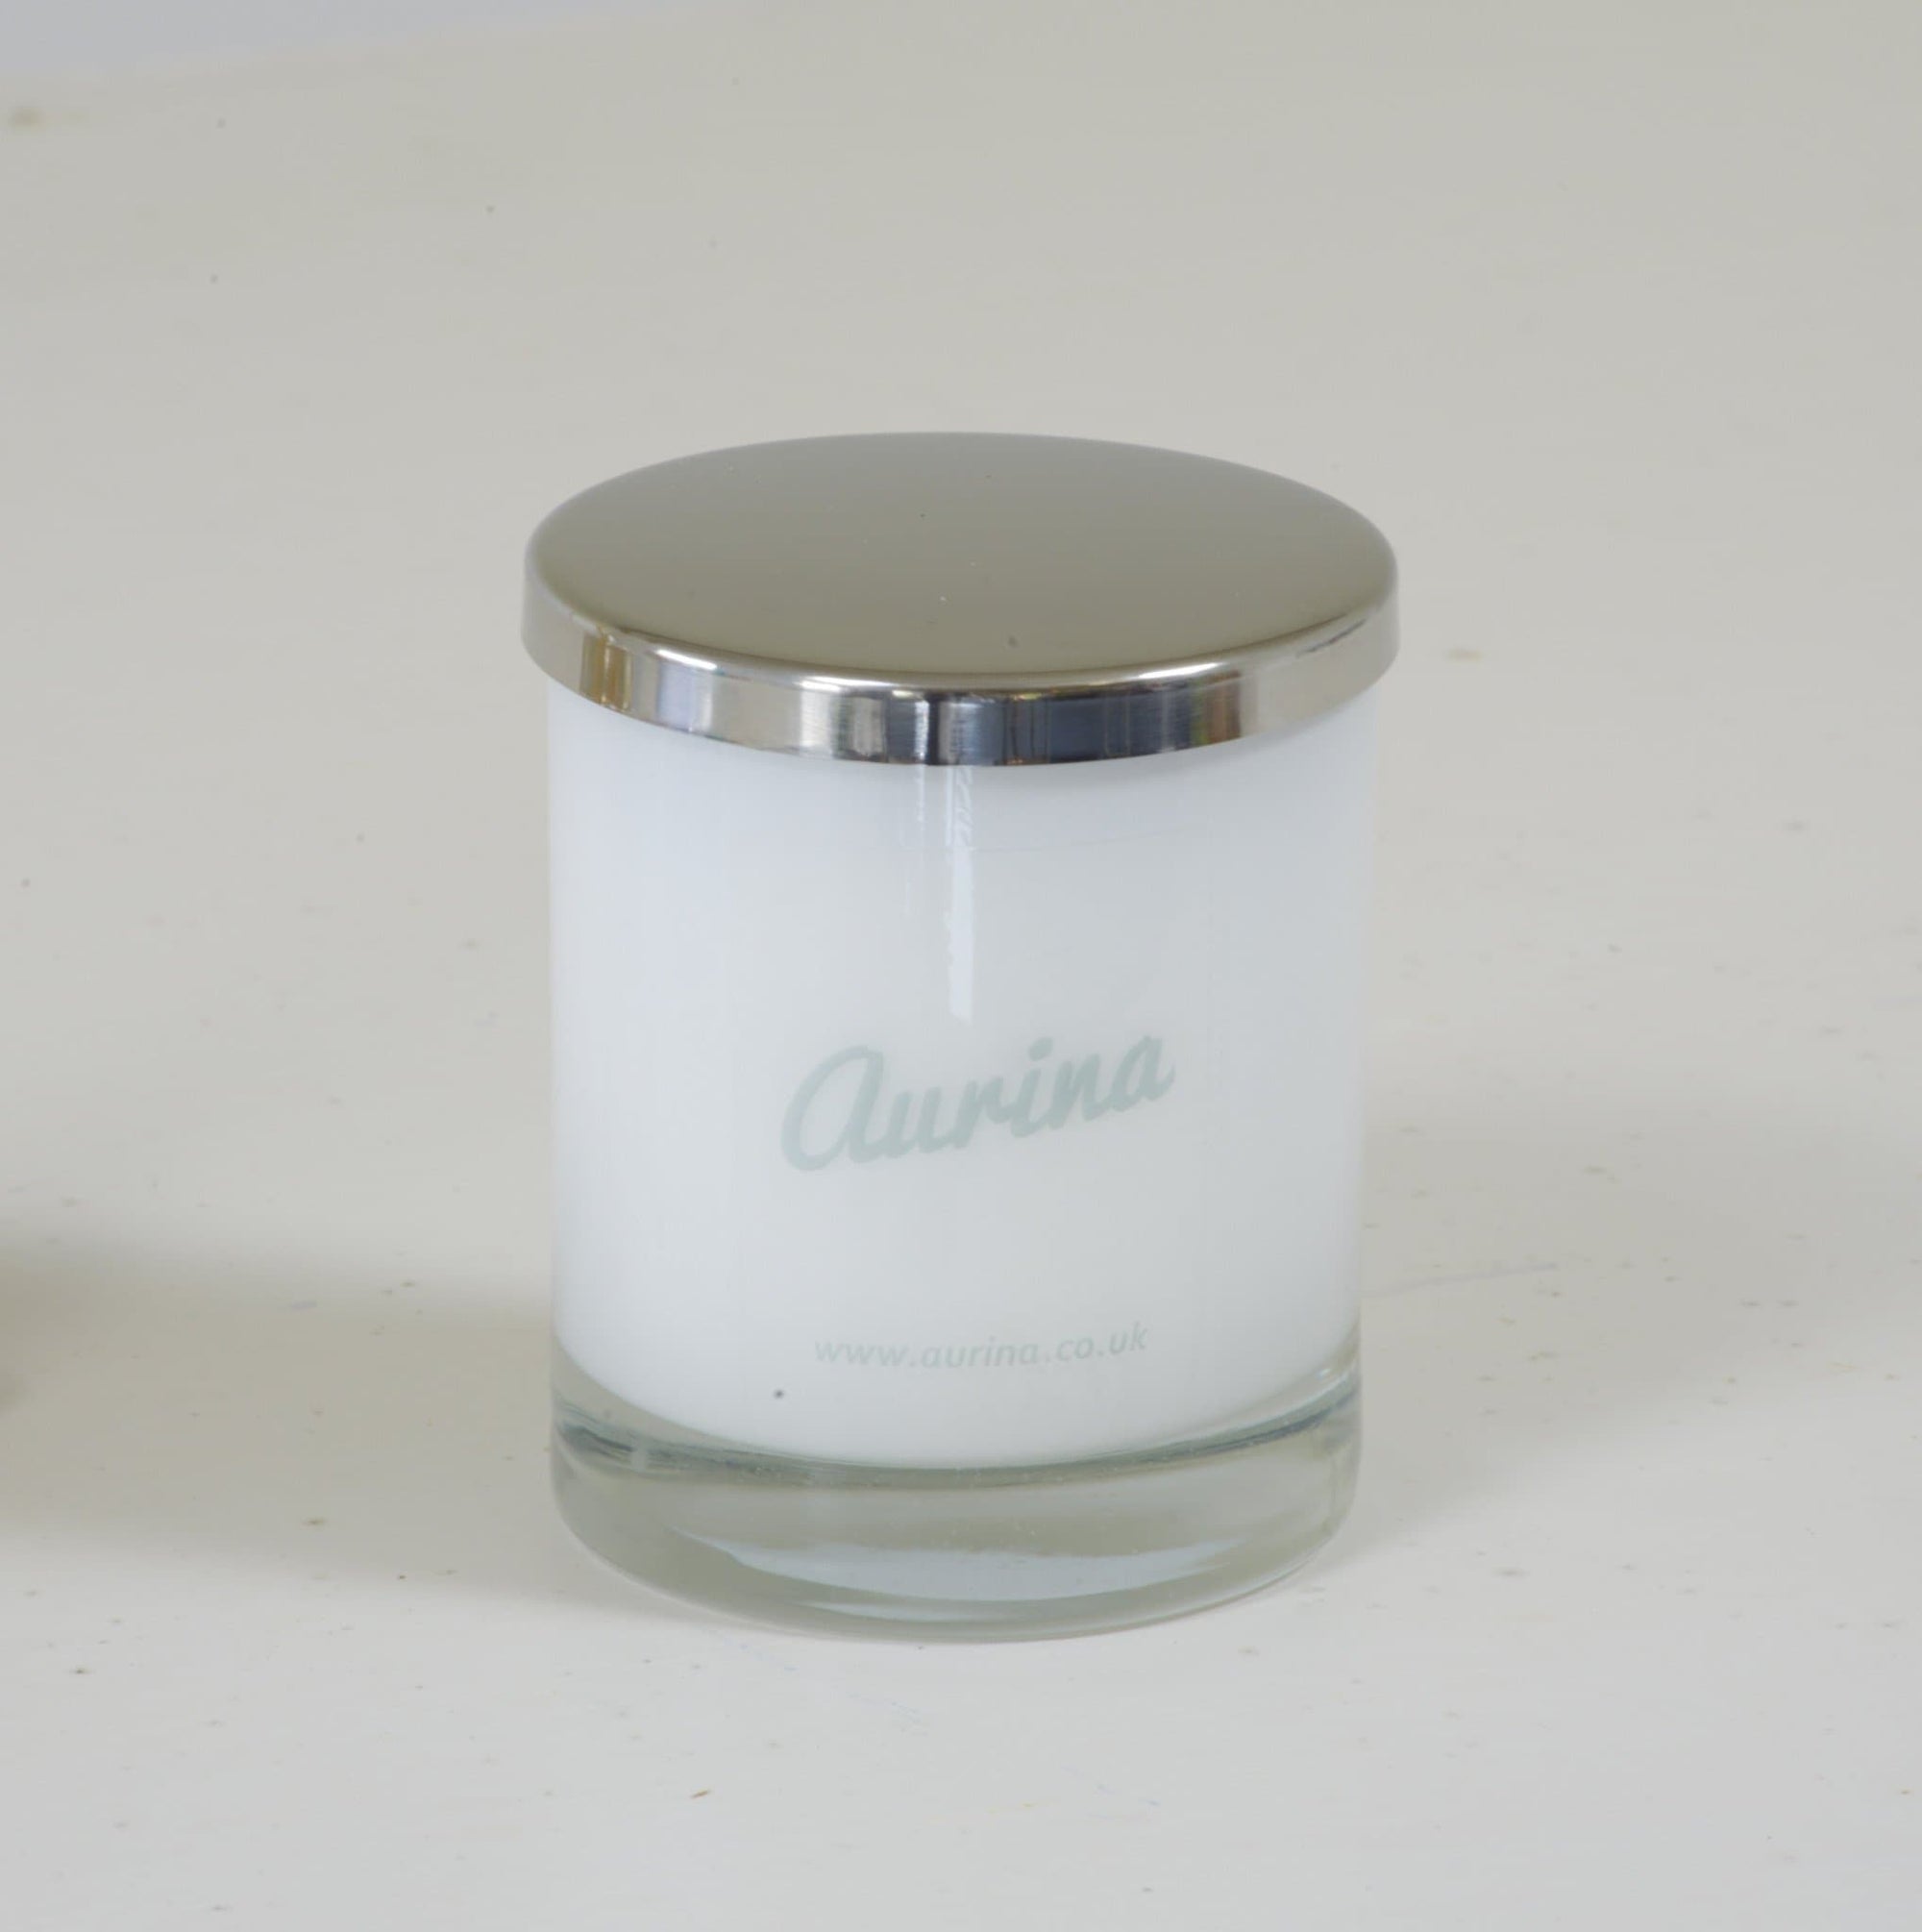 Citrus Grove Candle - Aurina Ltd